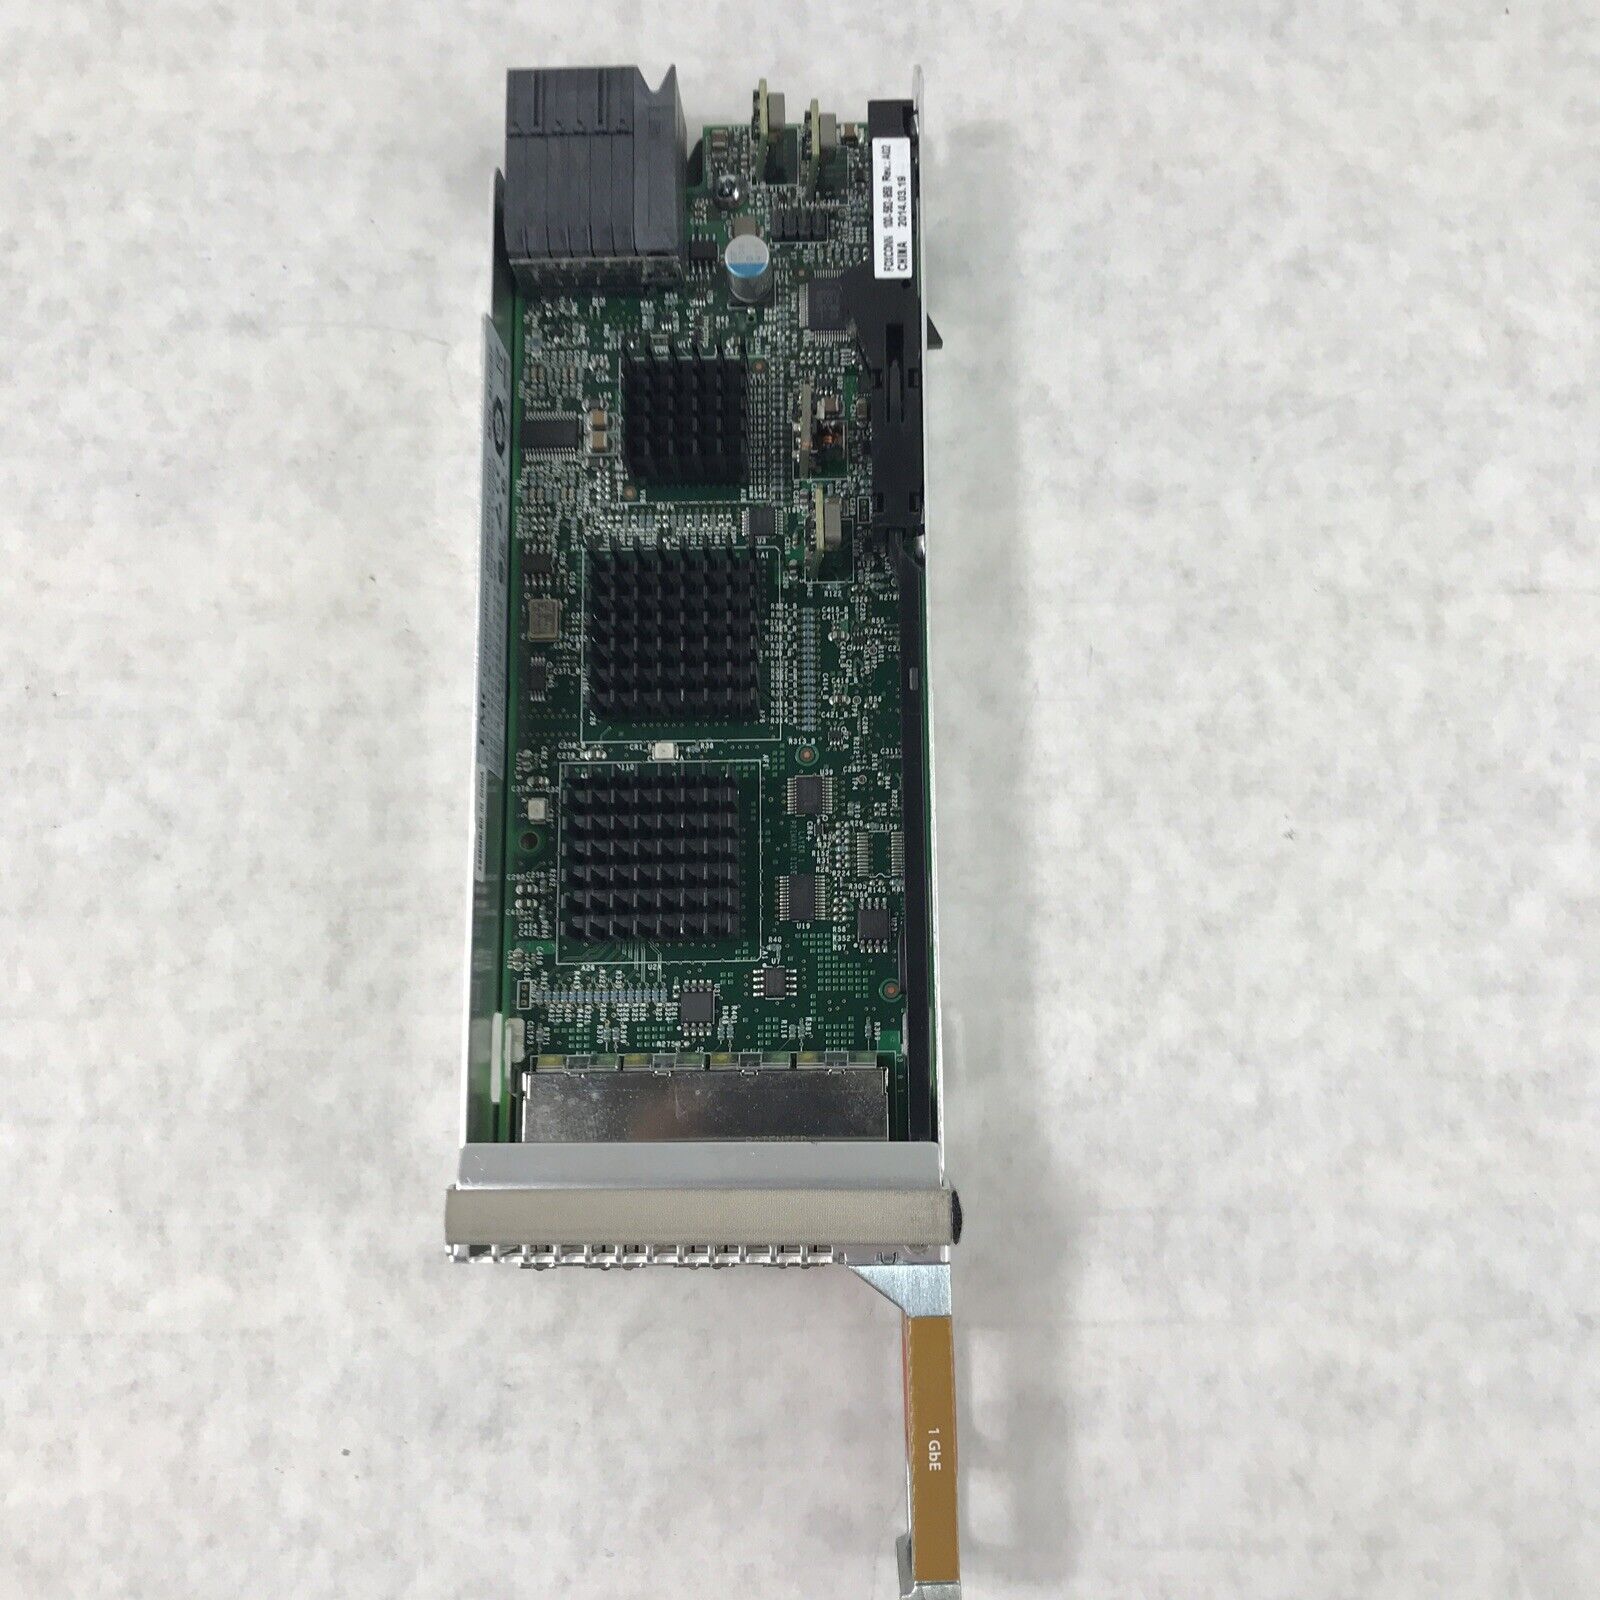 (Lot of 2) Foxconn 042-007-364 SLIC07 4-Port Gigabit Ethernet I/O Module Card